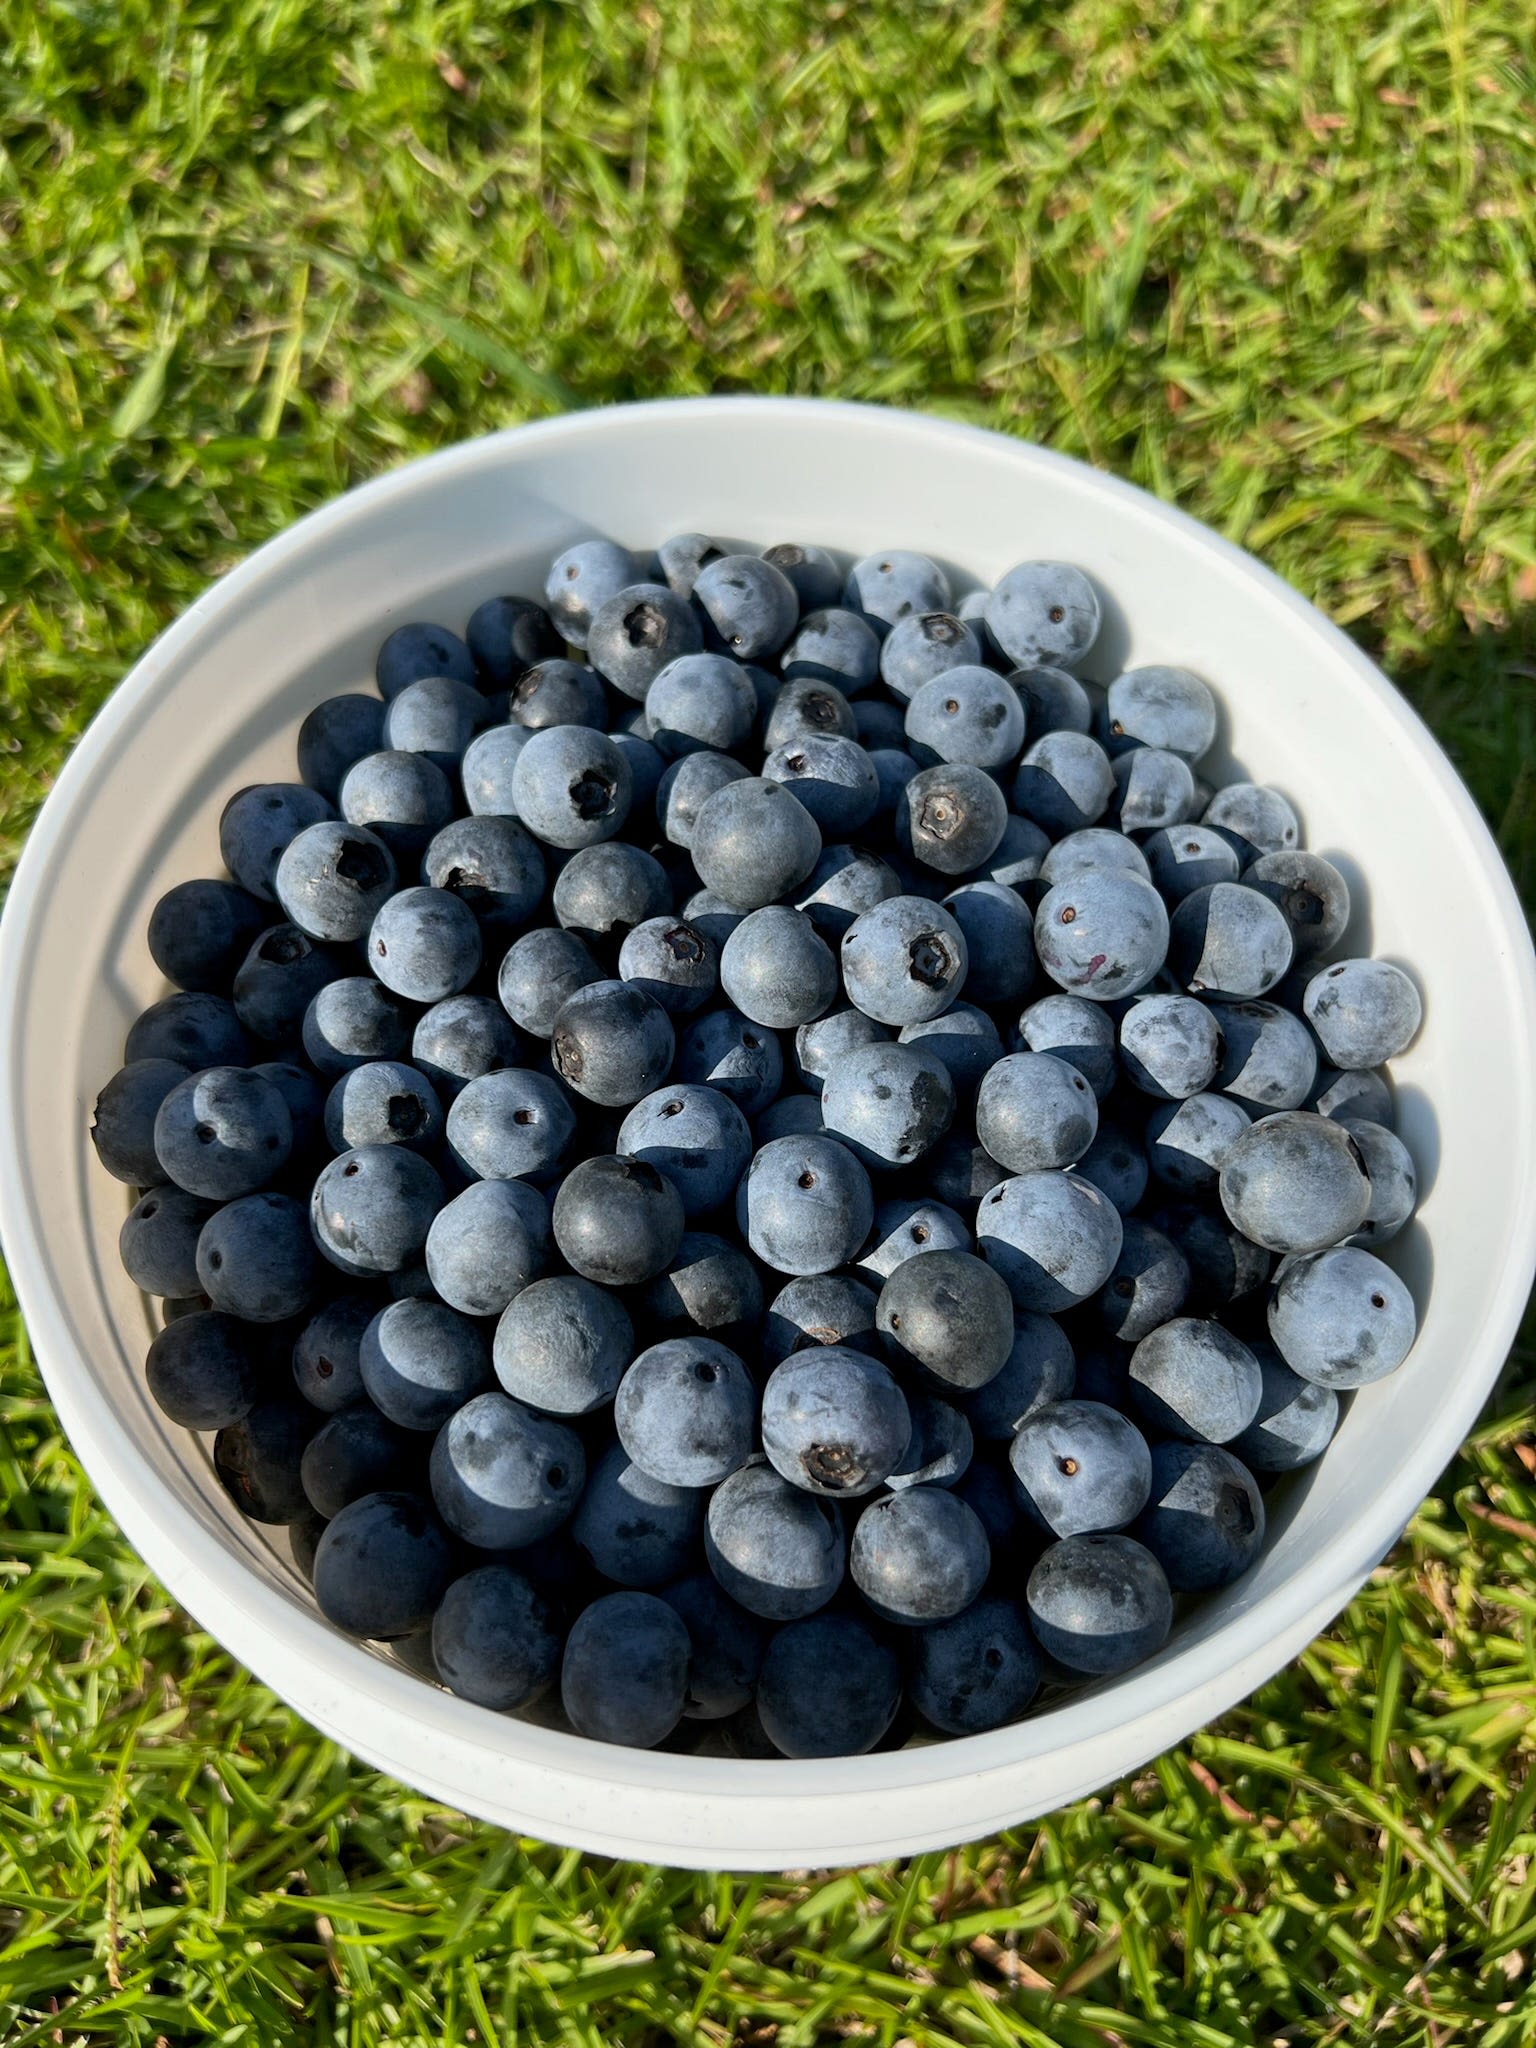 New Tallahassee blueberry farm opens U-Pick season Saturday